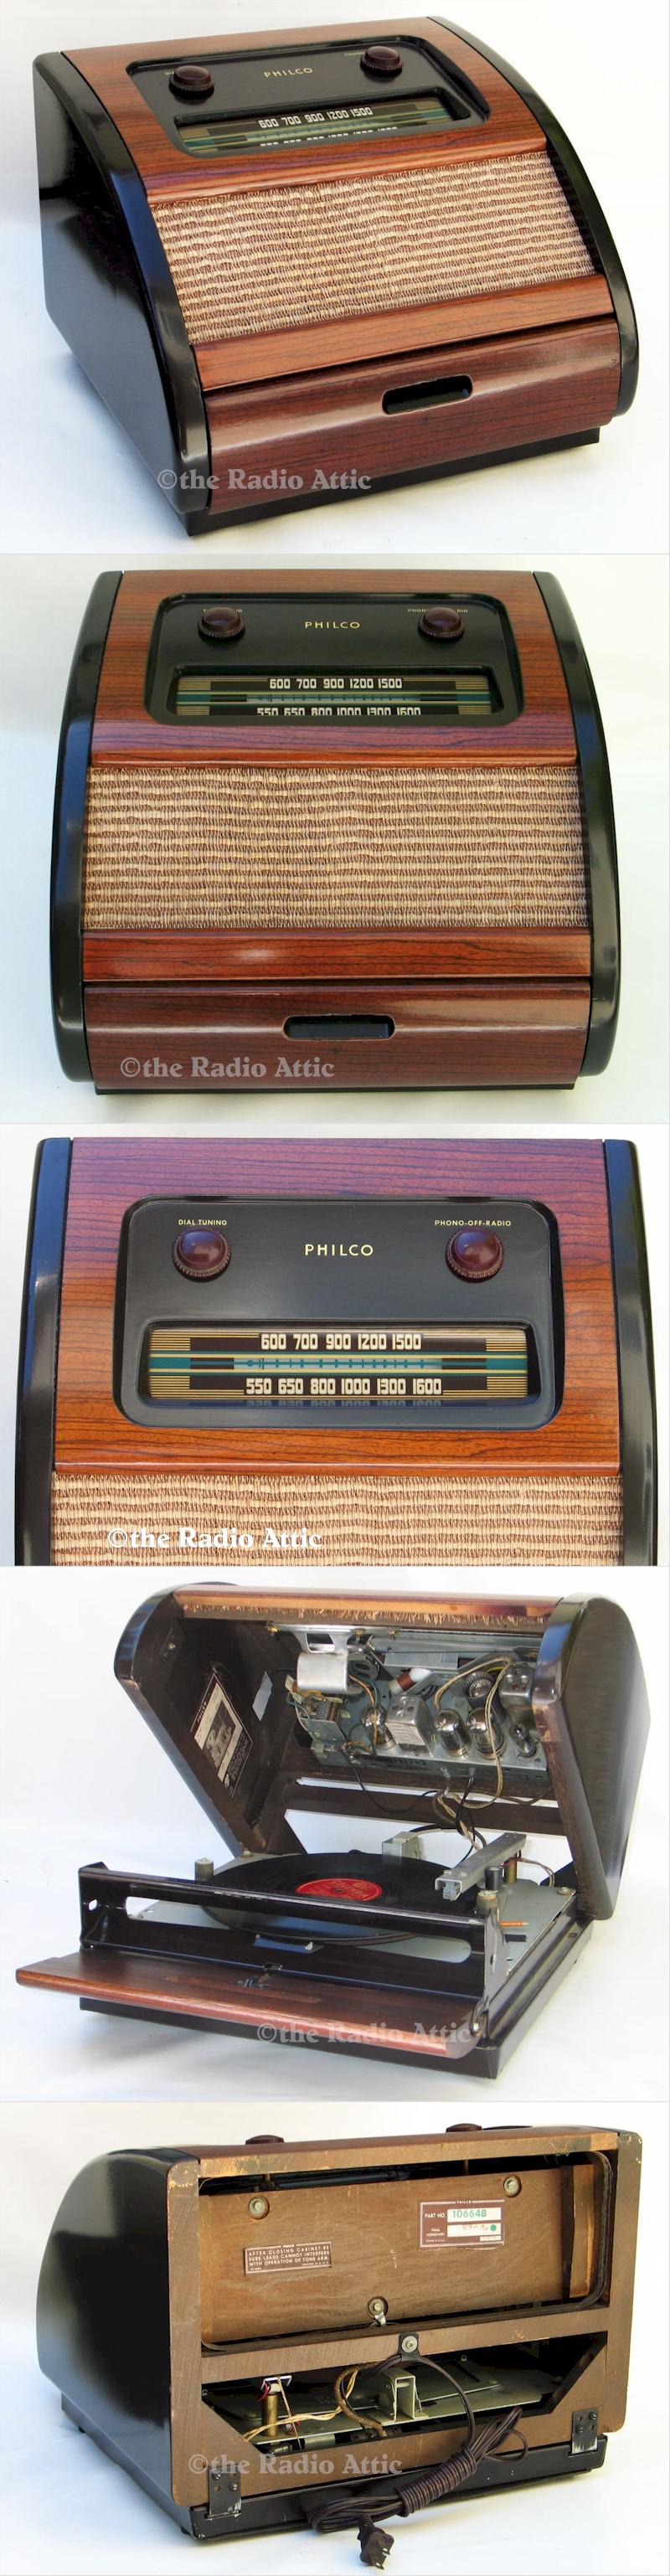 Philco 46-1201 "Bing Crosby" Radio-Phono